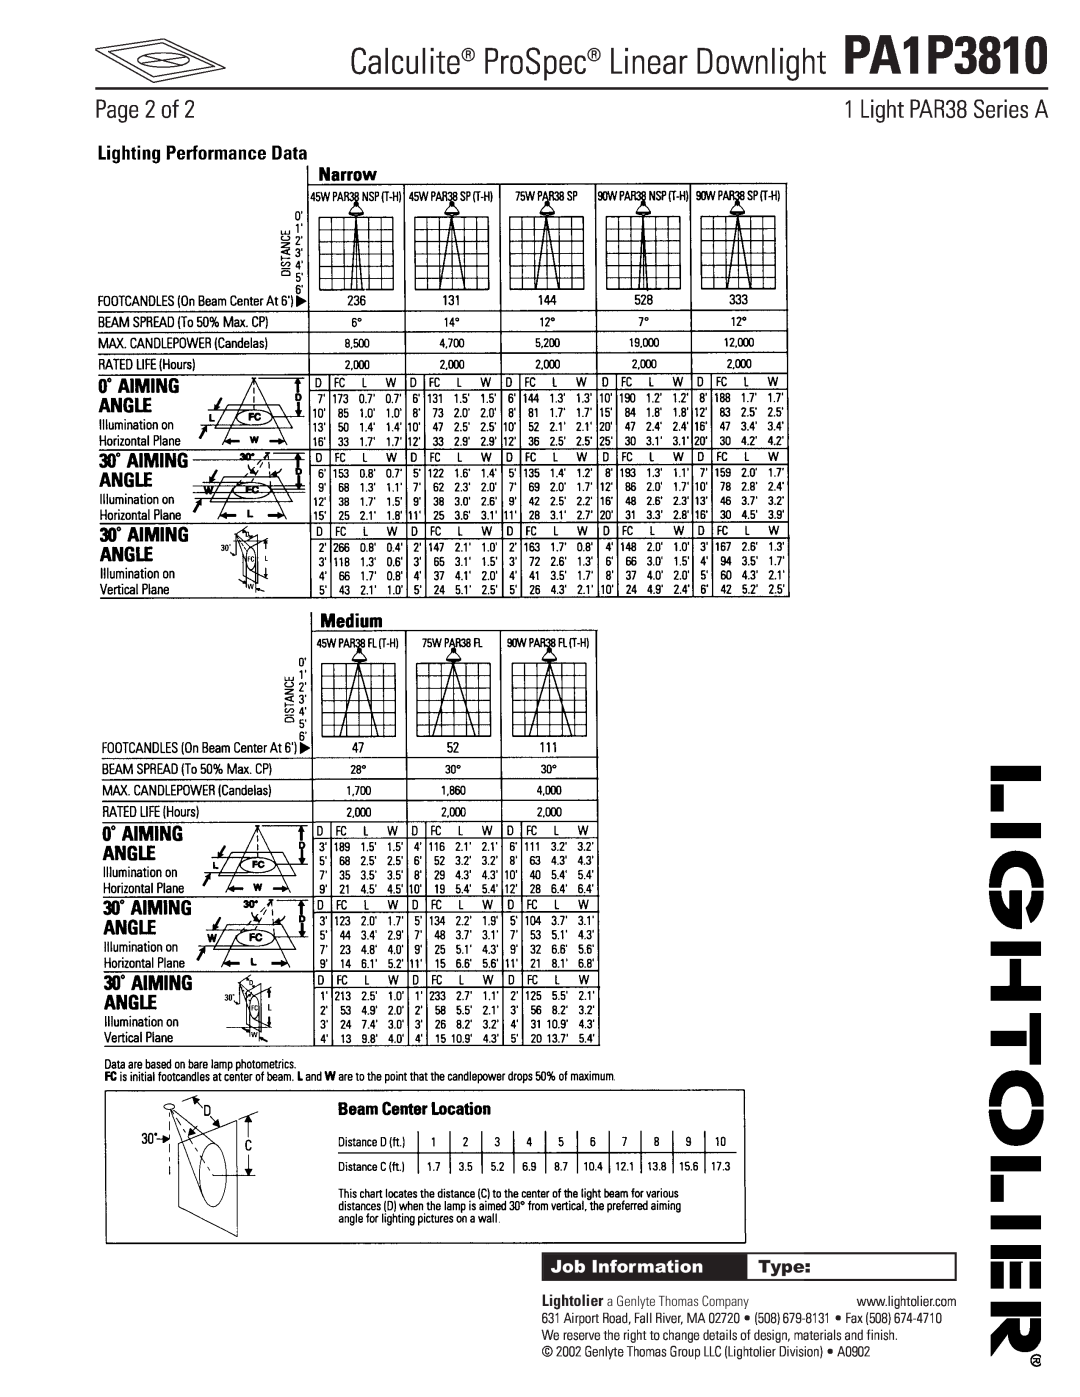 Lightolier manual Page 2 of, Calculite ProSpec Linear Downlight PA1P3810, Light PAR38 Series A, Job Information, Type 